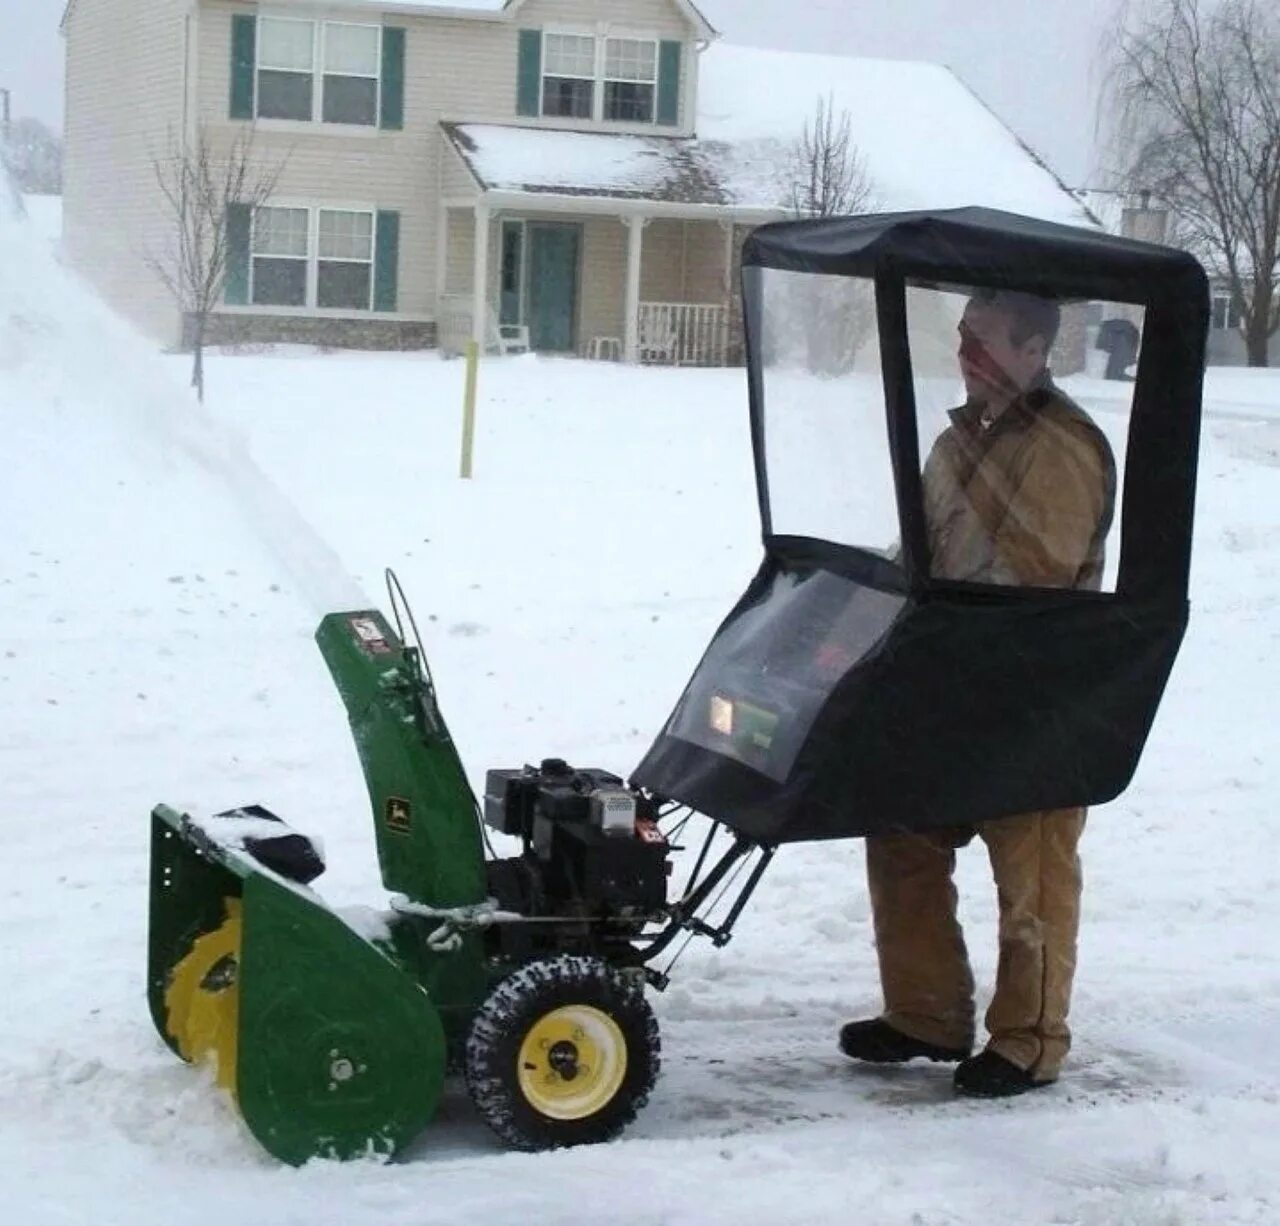 Кабина трактора мини. Снегоуборщик John Deere model 3tn66uj. Минитрактор Авант снегоуборщик. Минитрактор Хонда для уборки снега. Трактор Джон Дир для уборки снега.